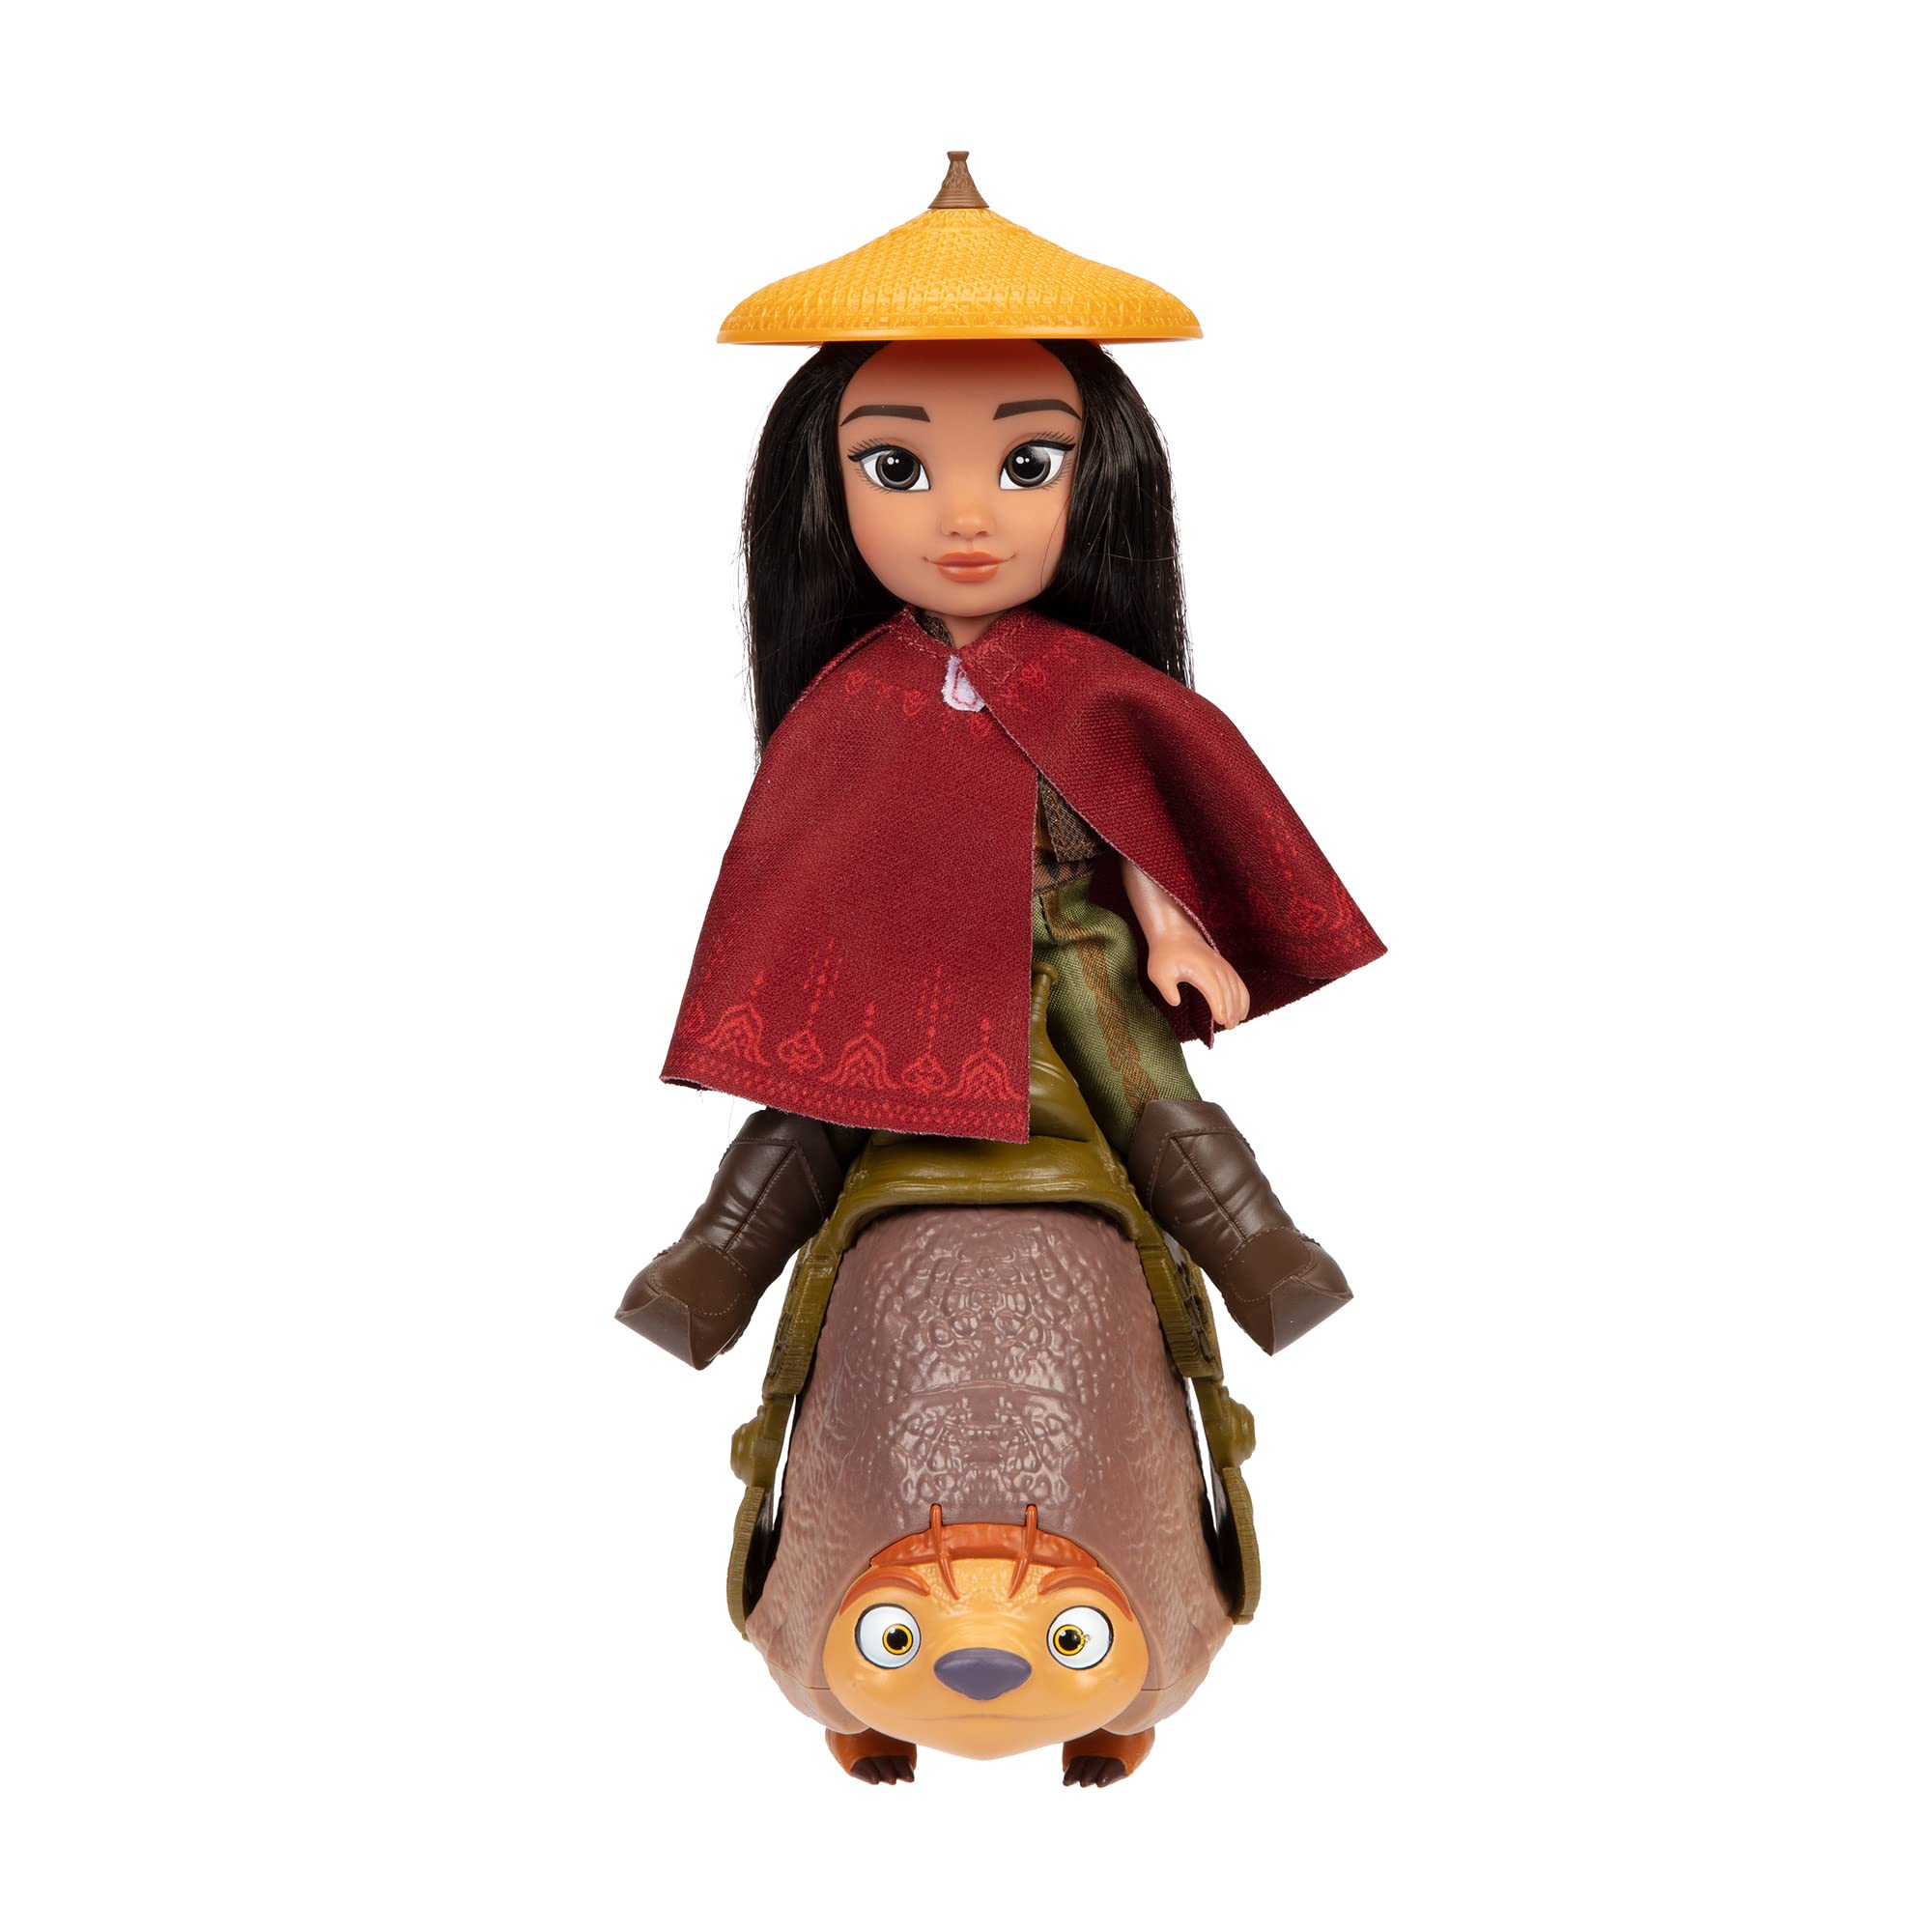 Disney Raya and The Last Dragon Petite Raya Doll & Tuk Tuk Toy Figure - Raya is 6 Inches Tall!